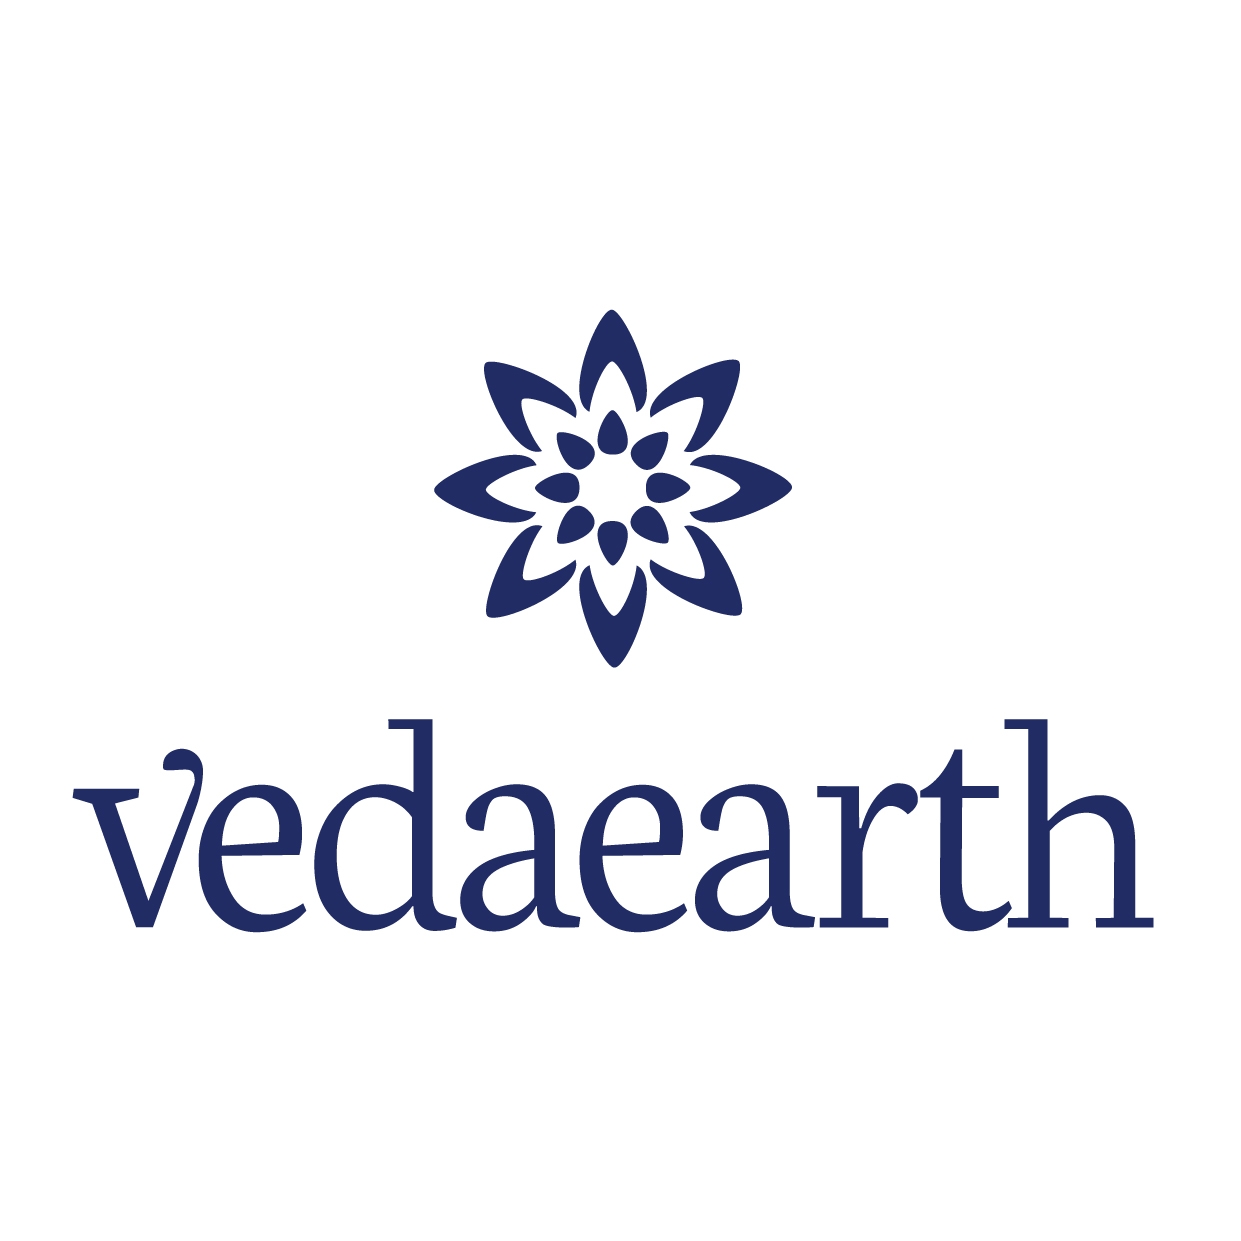 Veda Earth Try & Buy Offer